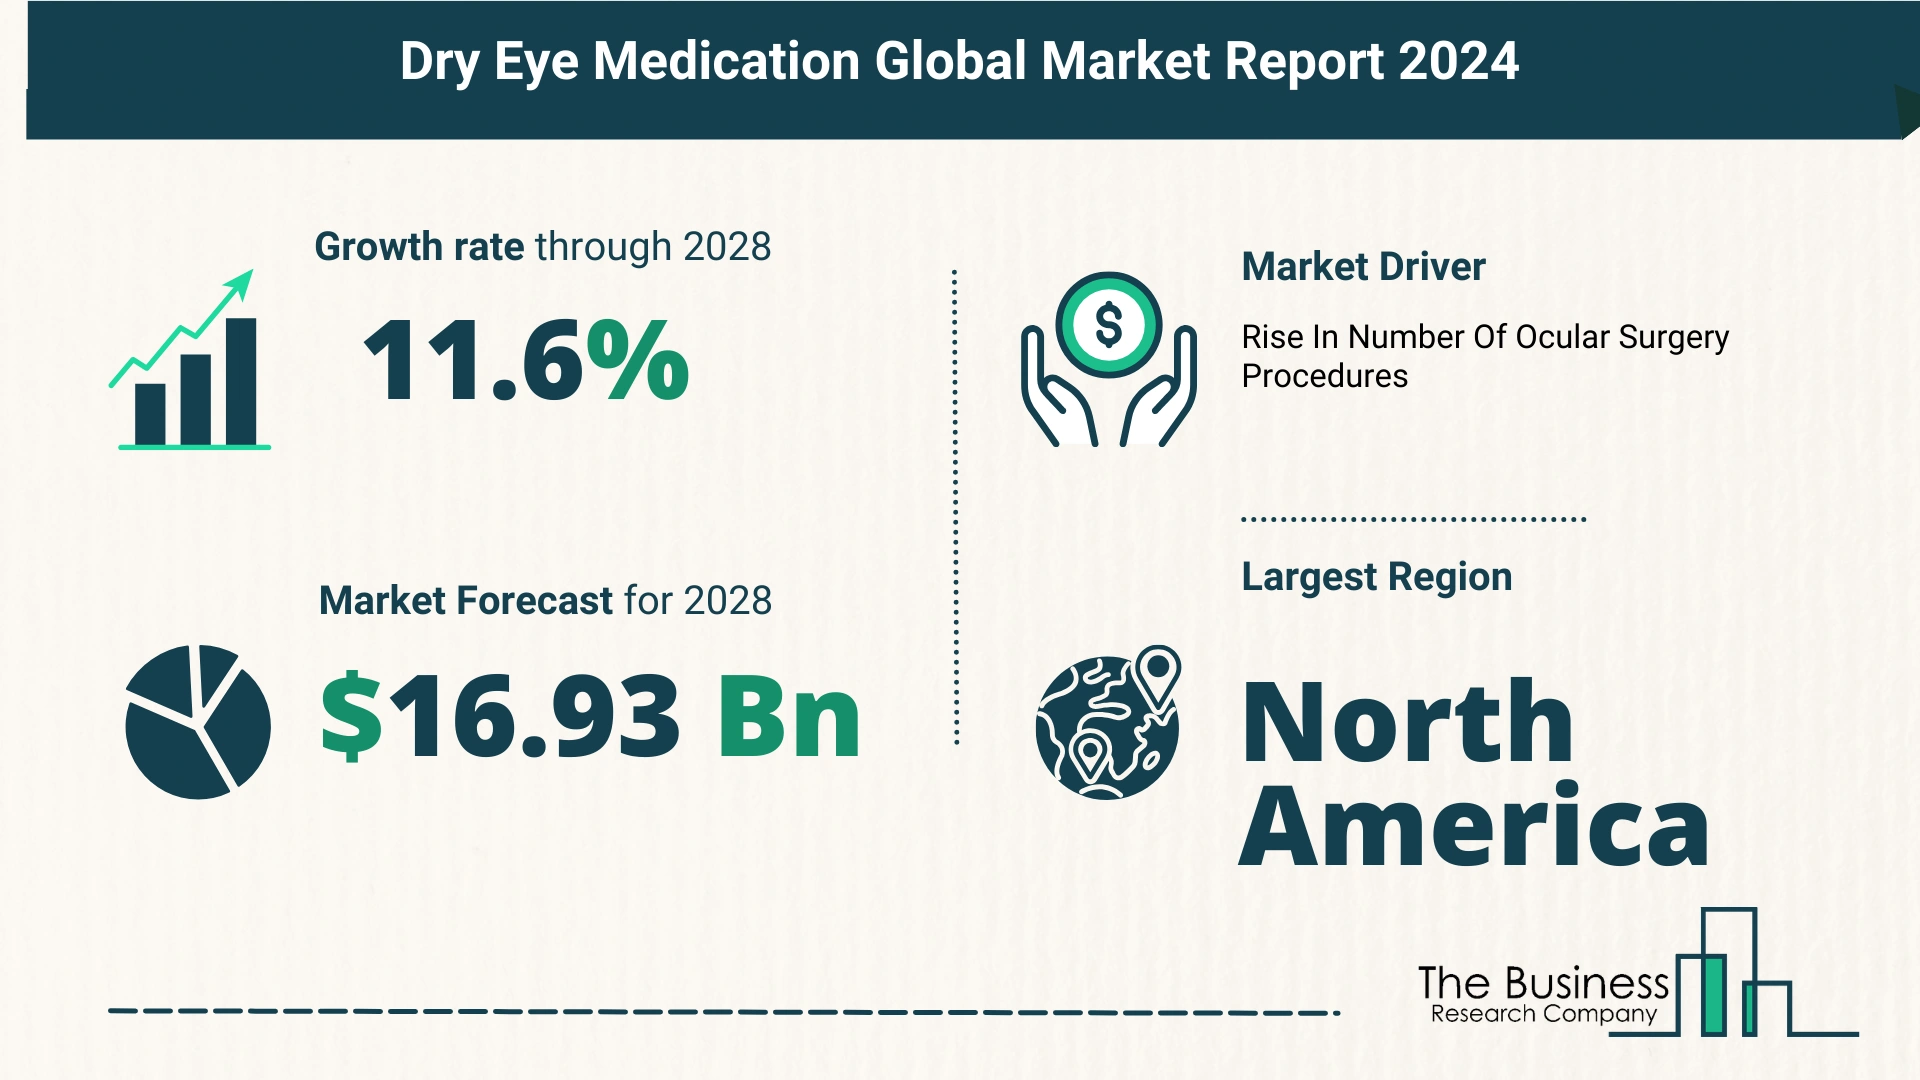 Global Dry Eye Medication Market